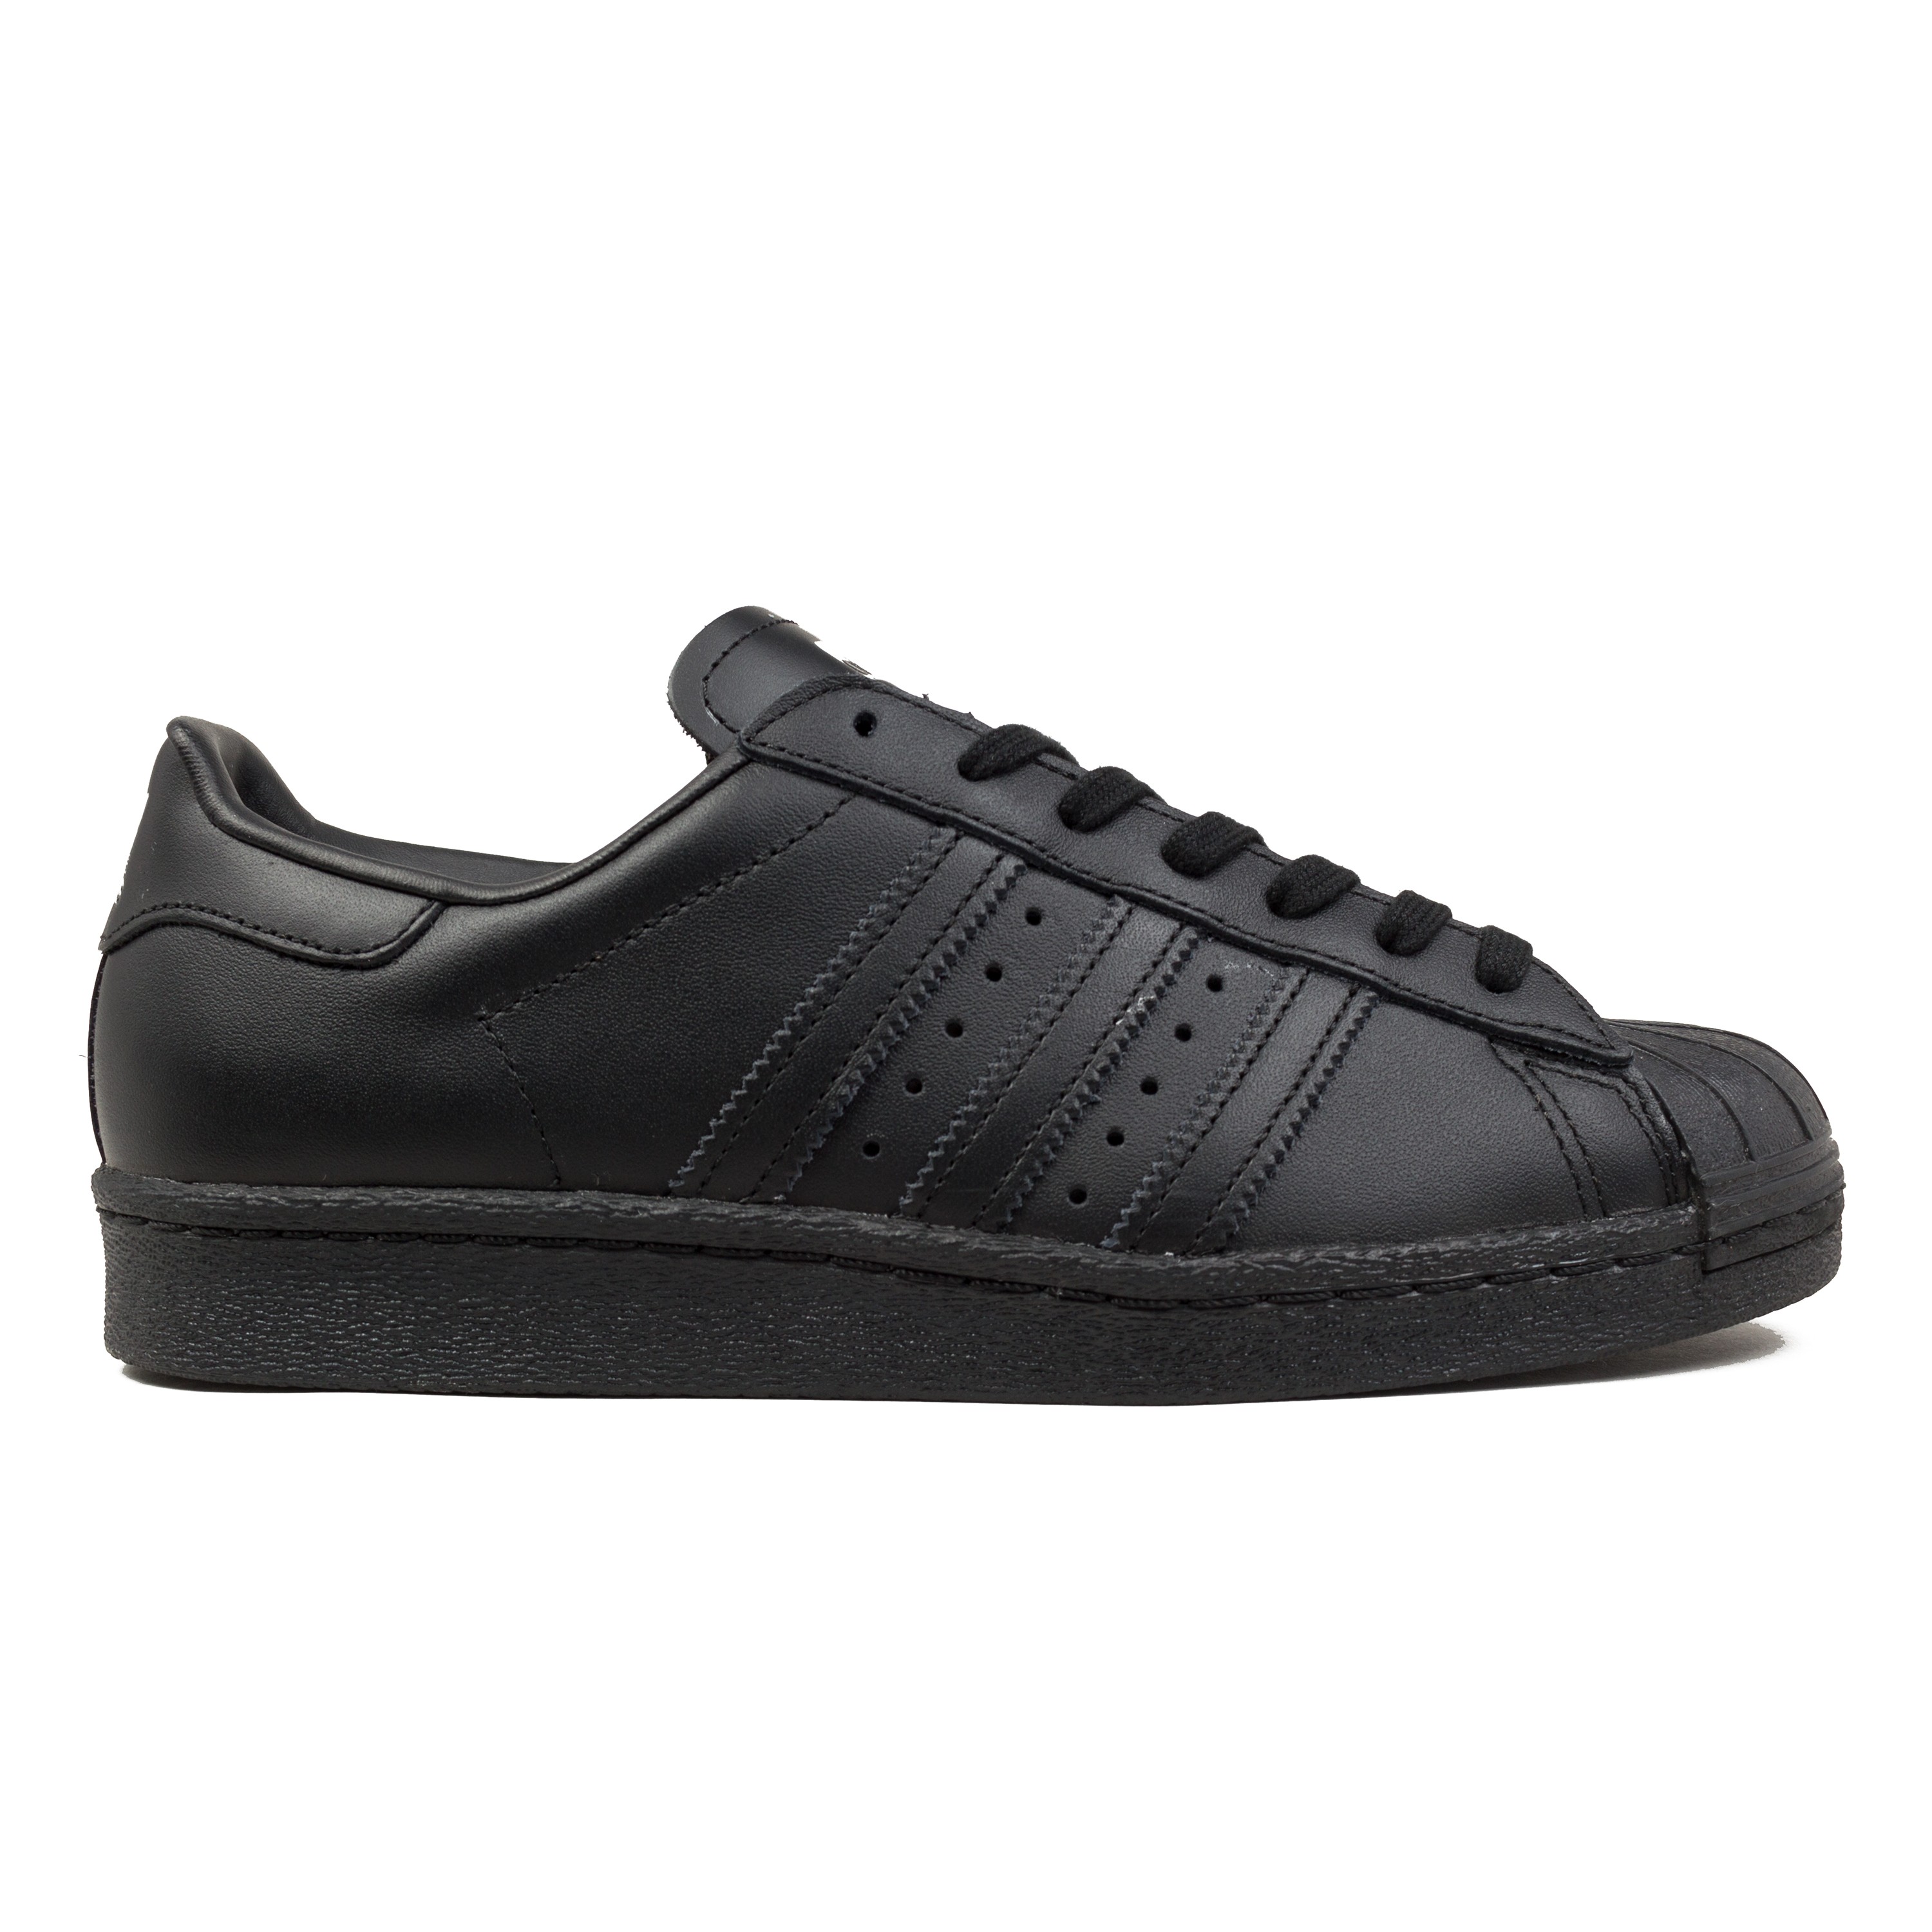 Adidas Superstar 80s (Core Black/Core Black/Footwear White) - Consortium.